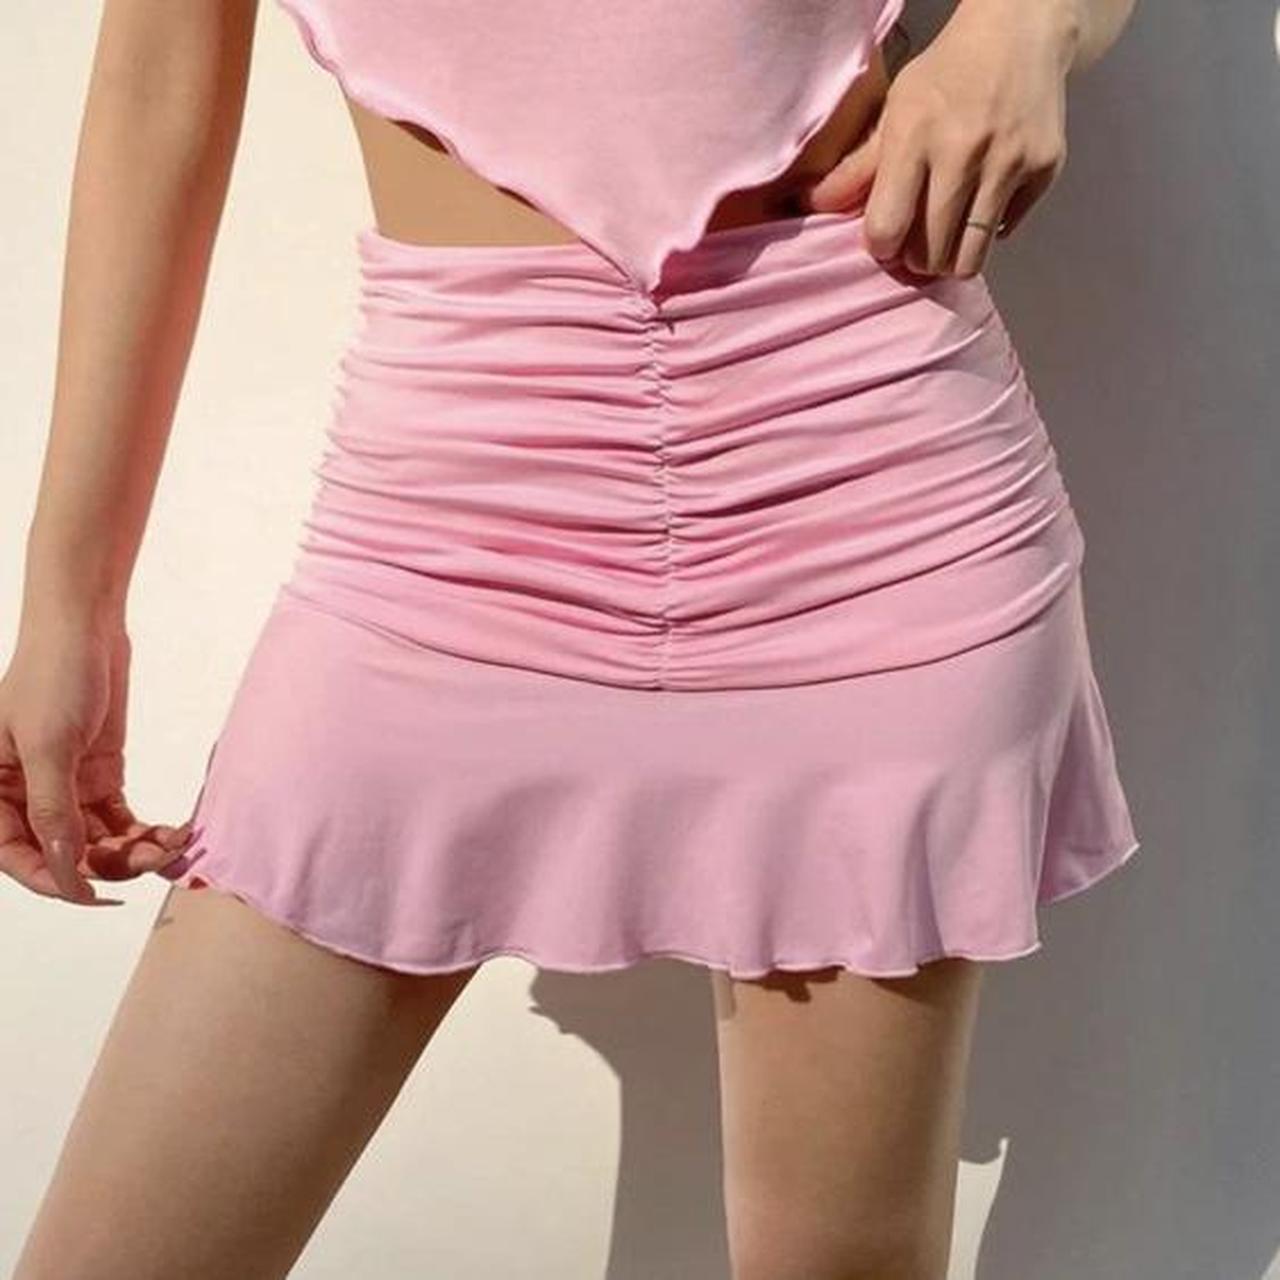 LA Pop Art Women's Pink Skirt (2)